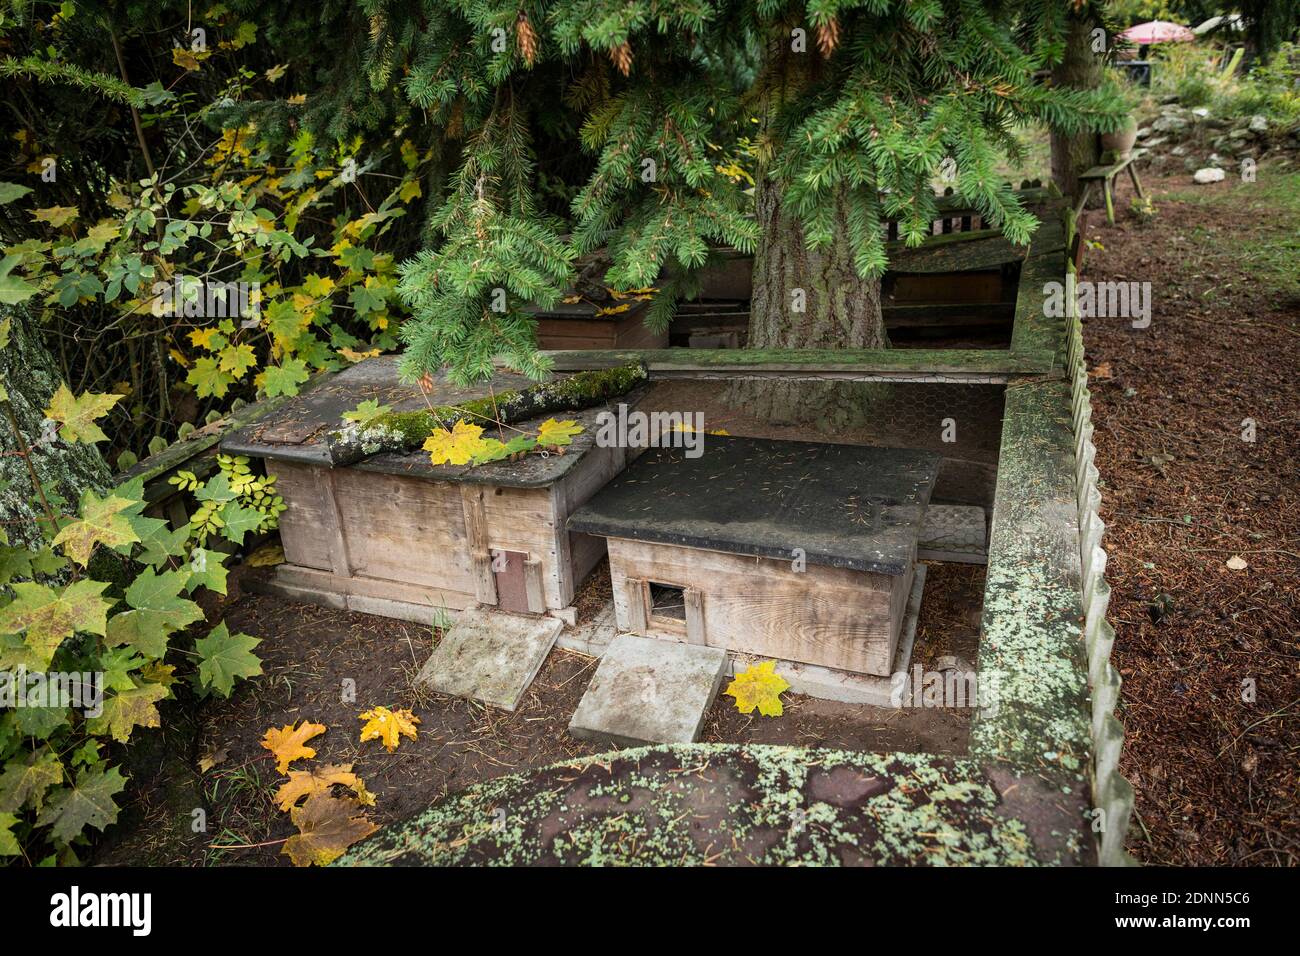 Common Hedgehog (Erinaceus europaeus). Hedgehog houses in an outdoor enclosure. Germany Stock Photo